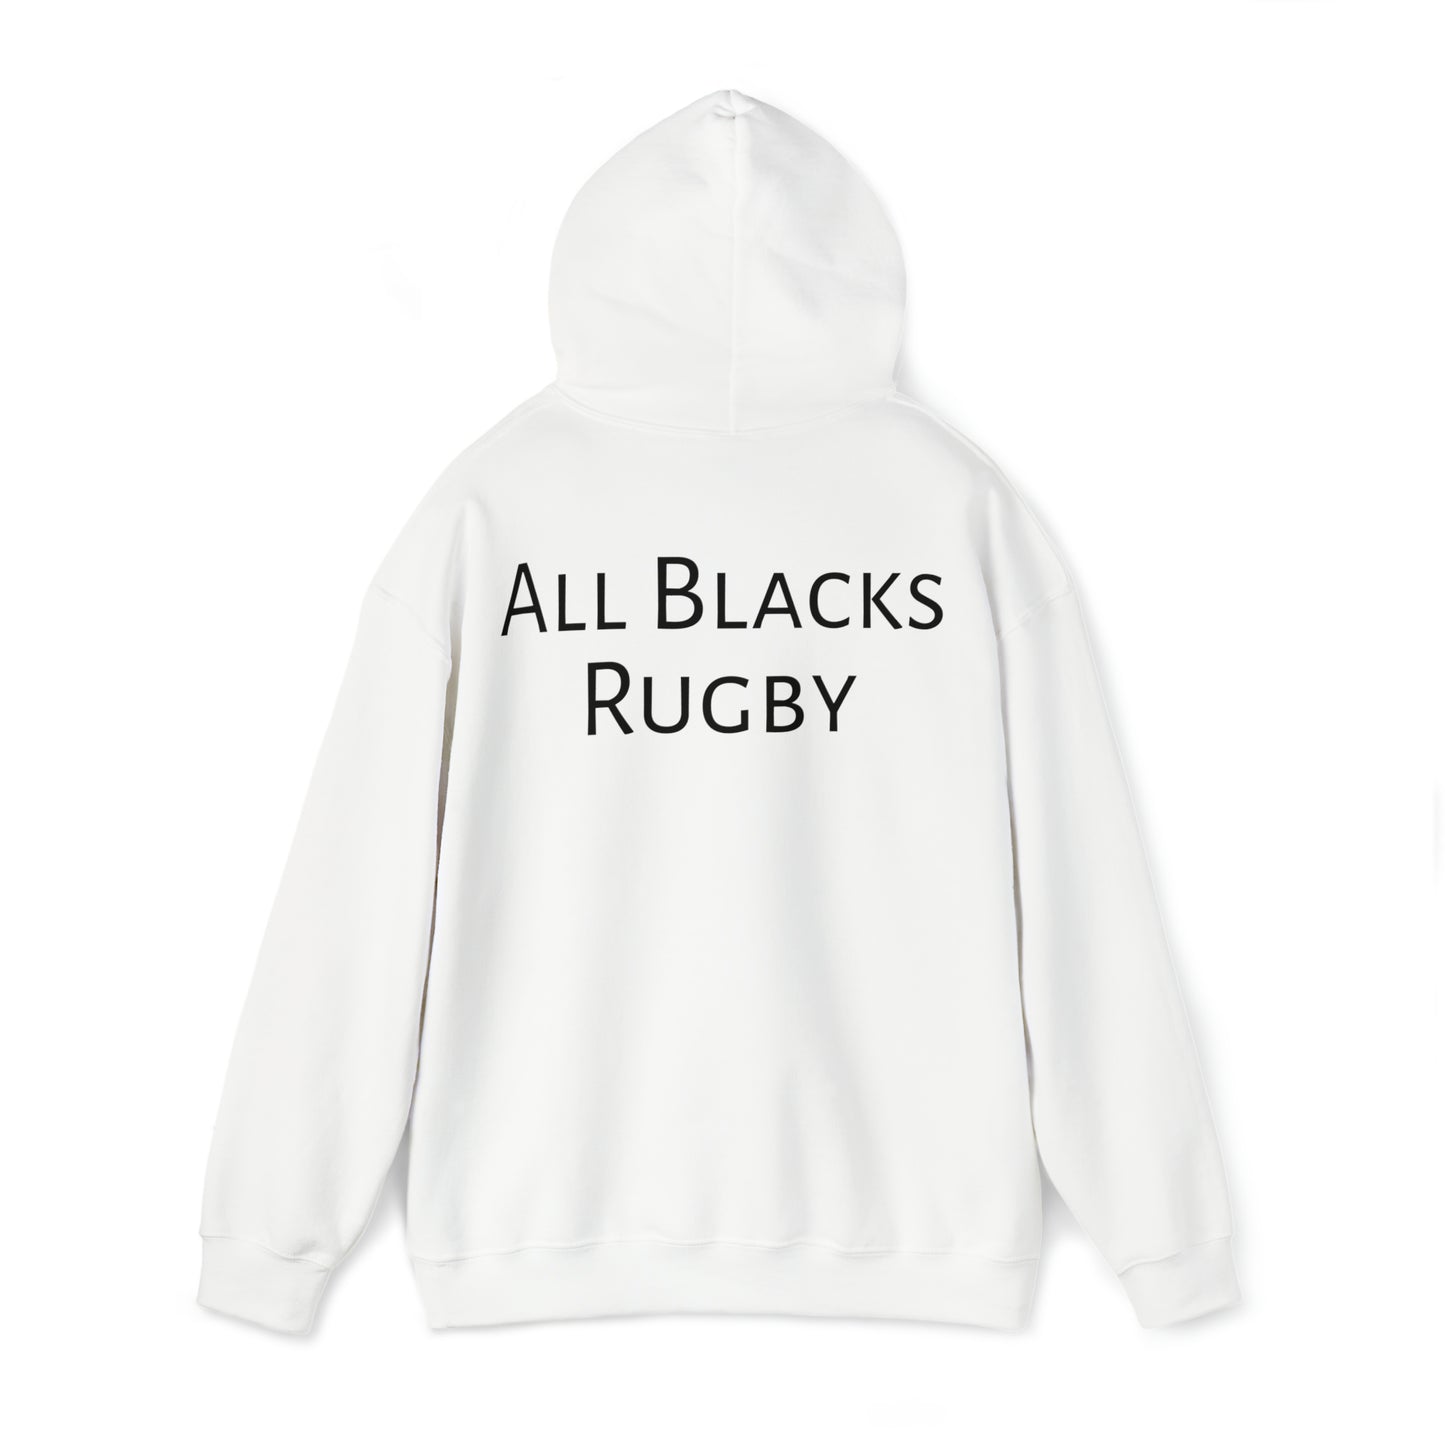 All Blacks lifting World Cup - light hoodies